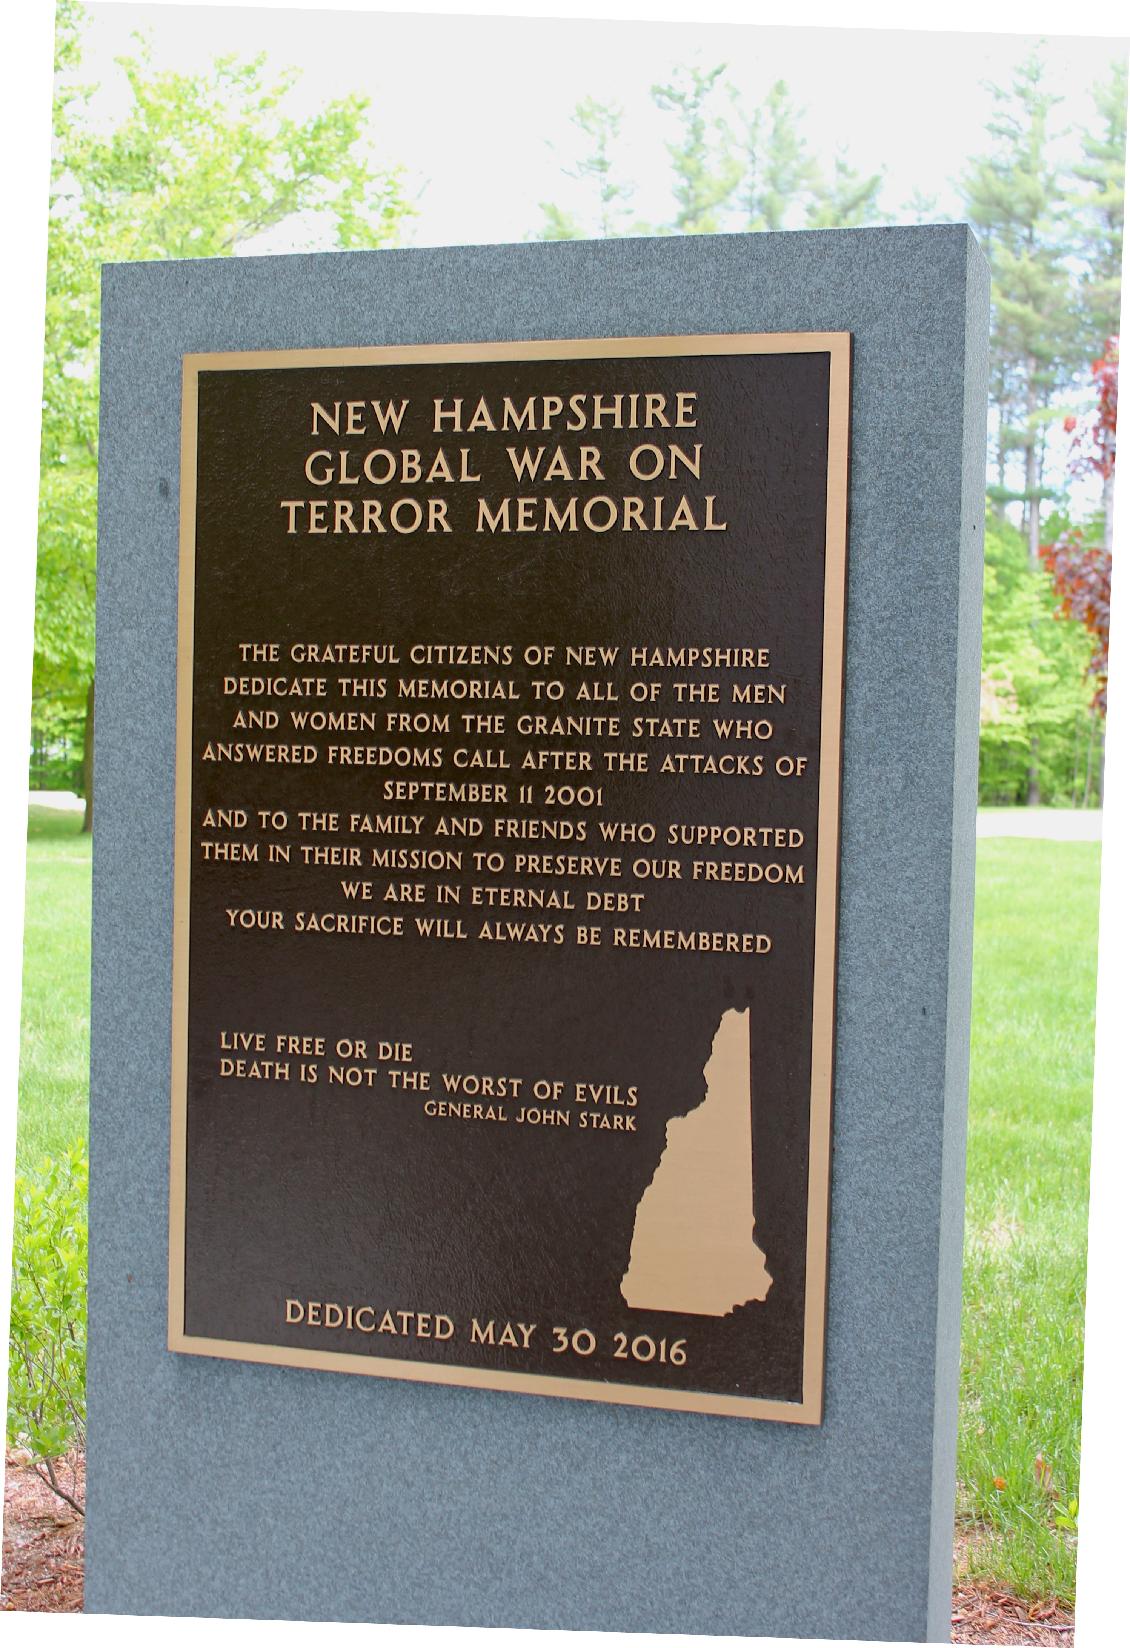 Global War on Terror Memorial Dedication NH State Veterans Cemetery May 30th 2016